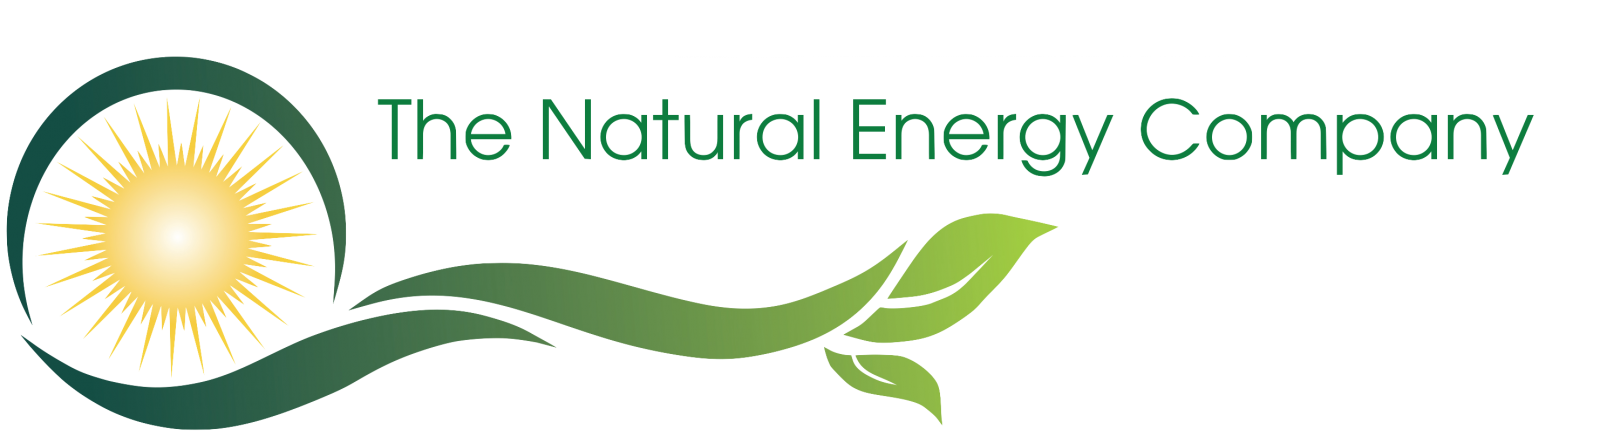 The Natural Energy Company (Scotland) Ltd